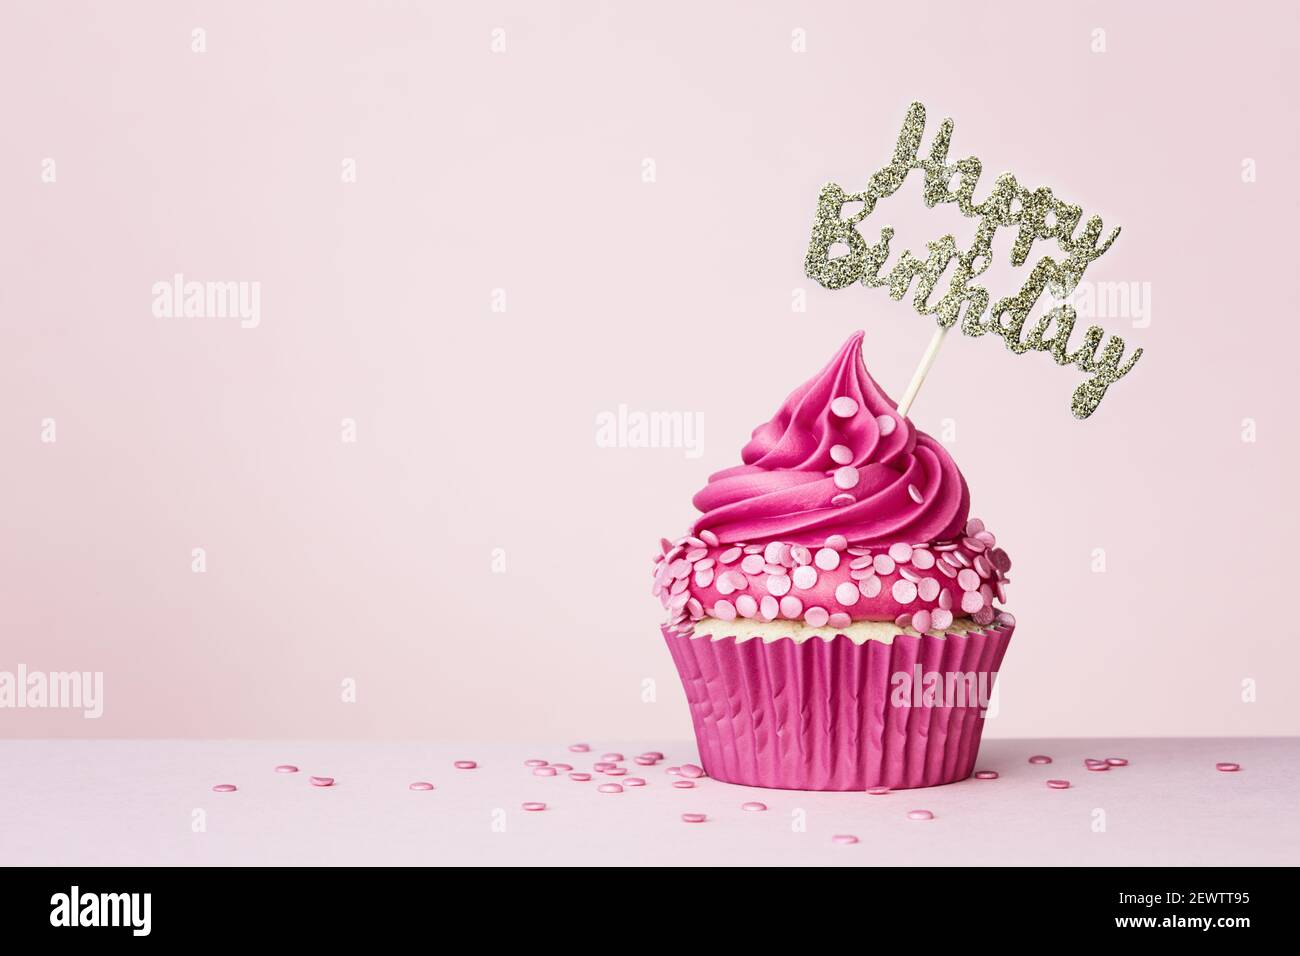 Birthday background with celebration cupcake with happy birthday banner on a pink background Stock Photo